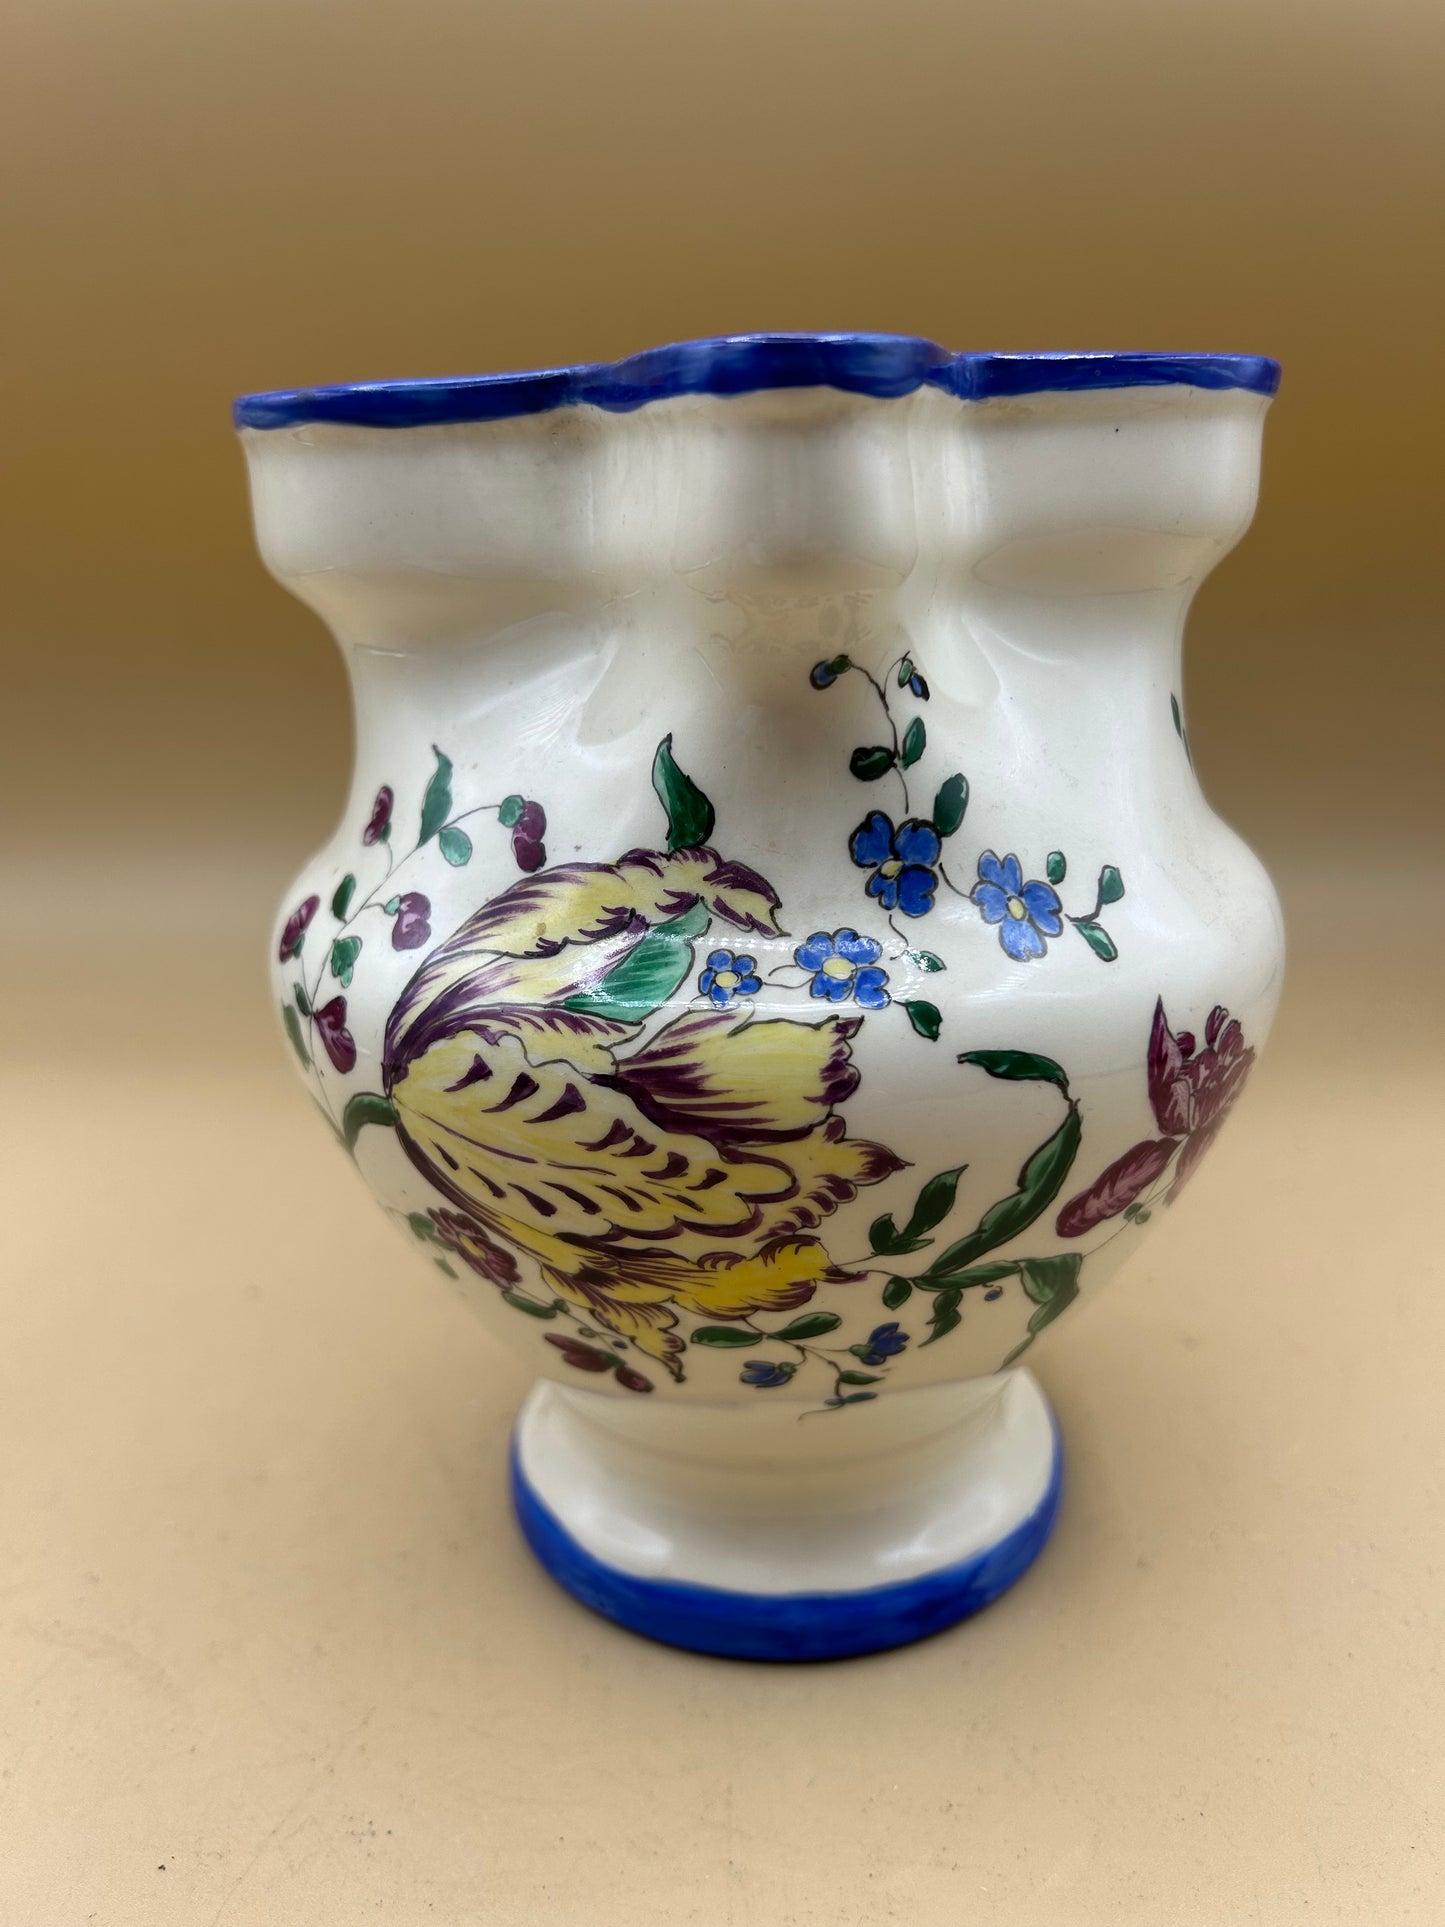 Handbemalter Laveno-Keramikkrug